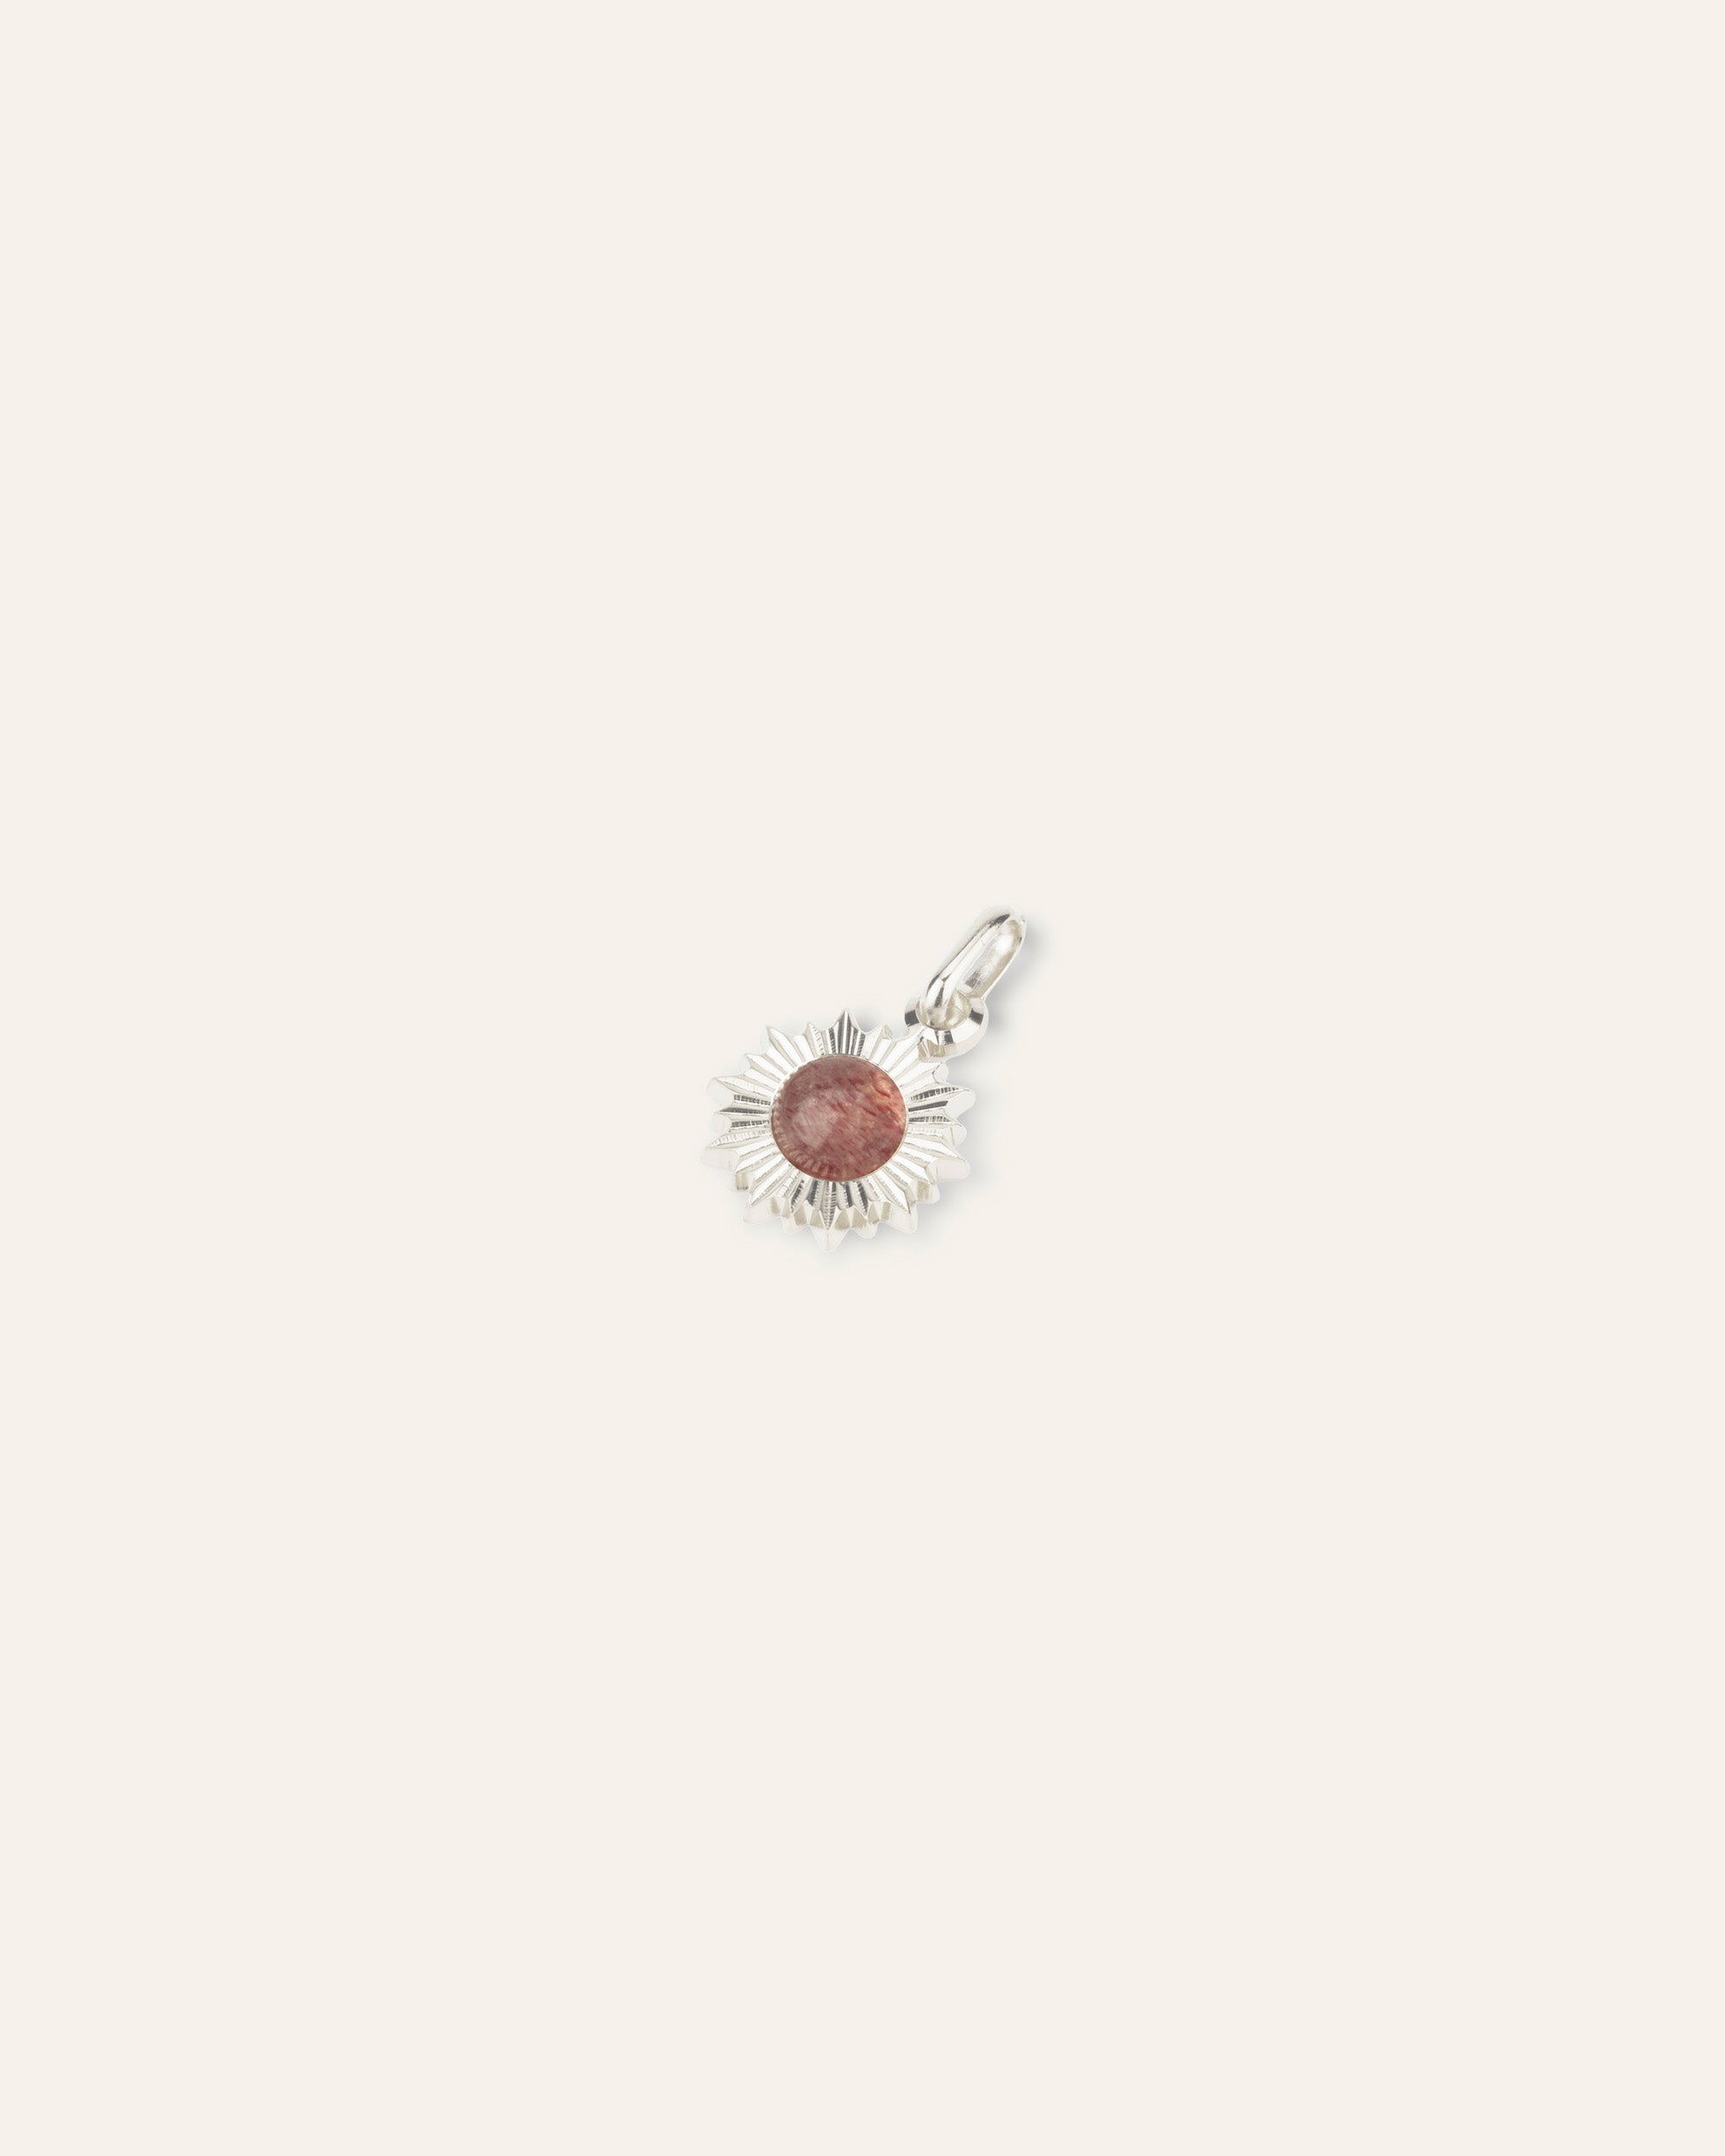 Ilios silver and raspberry quartz pendant